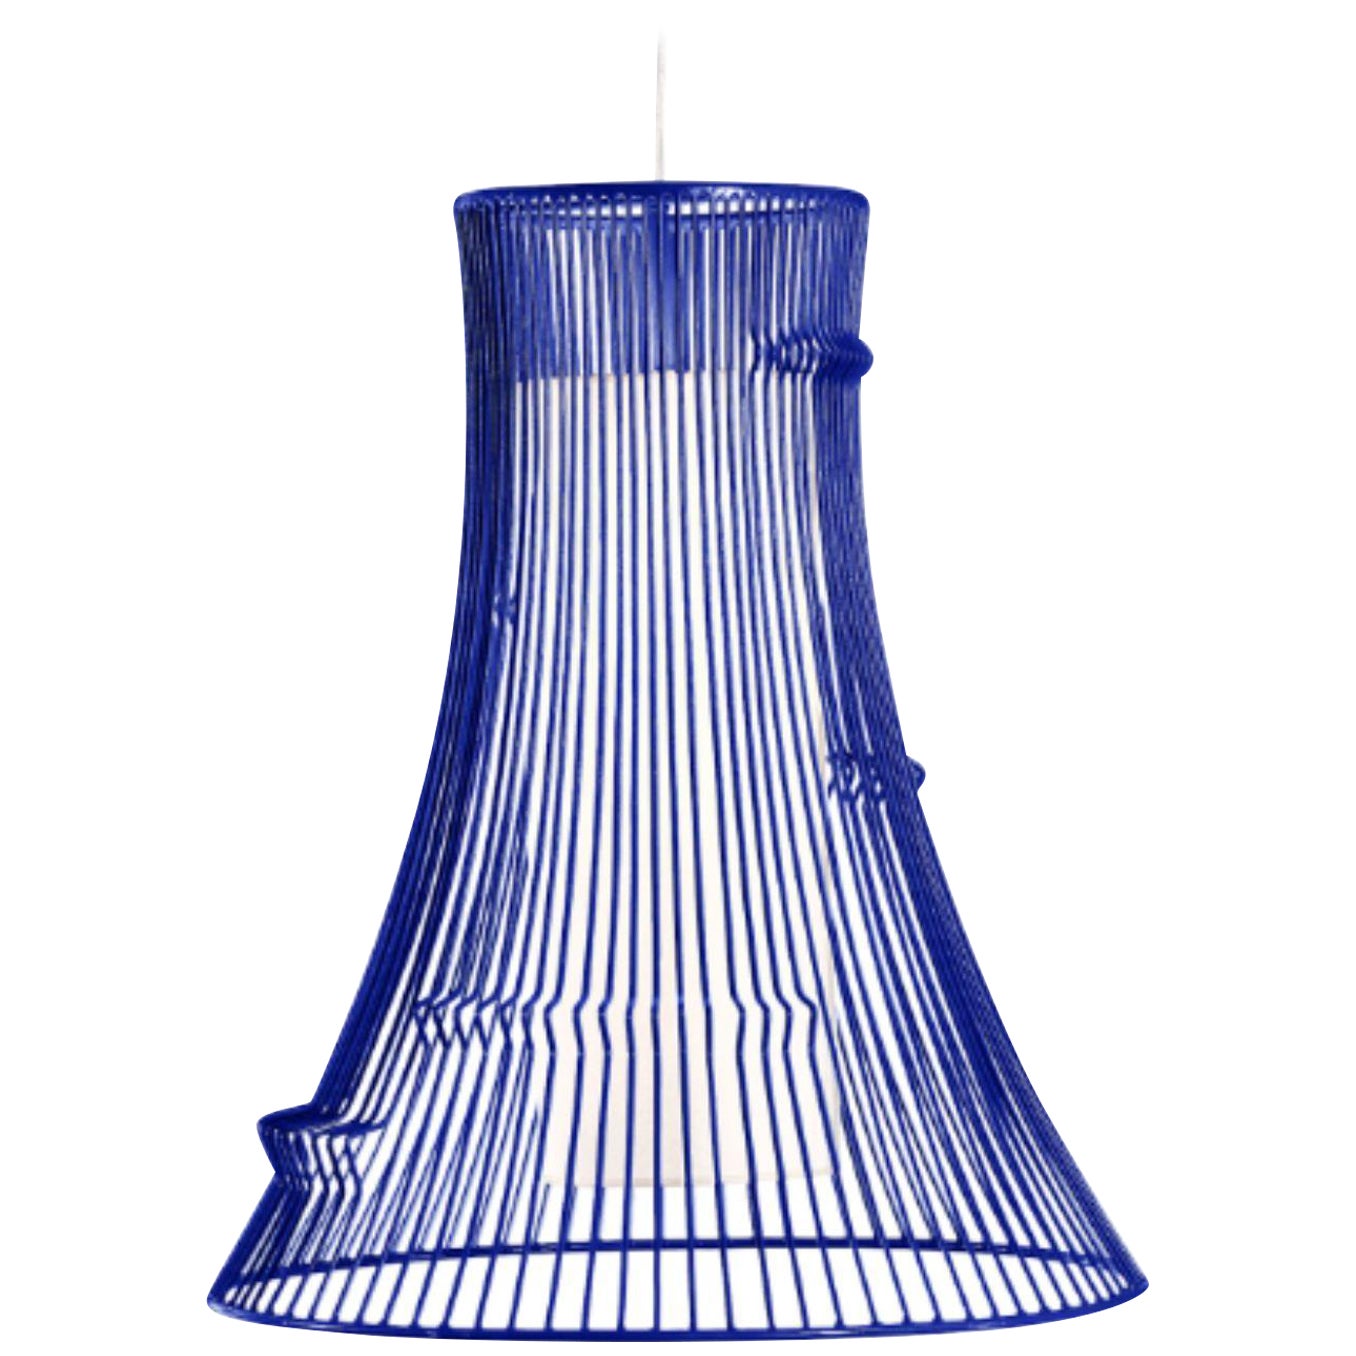 Cobalt Extrude Suspension Lamp by Dooq